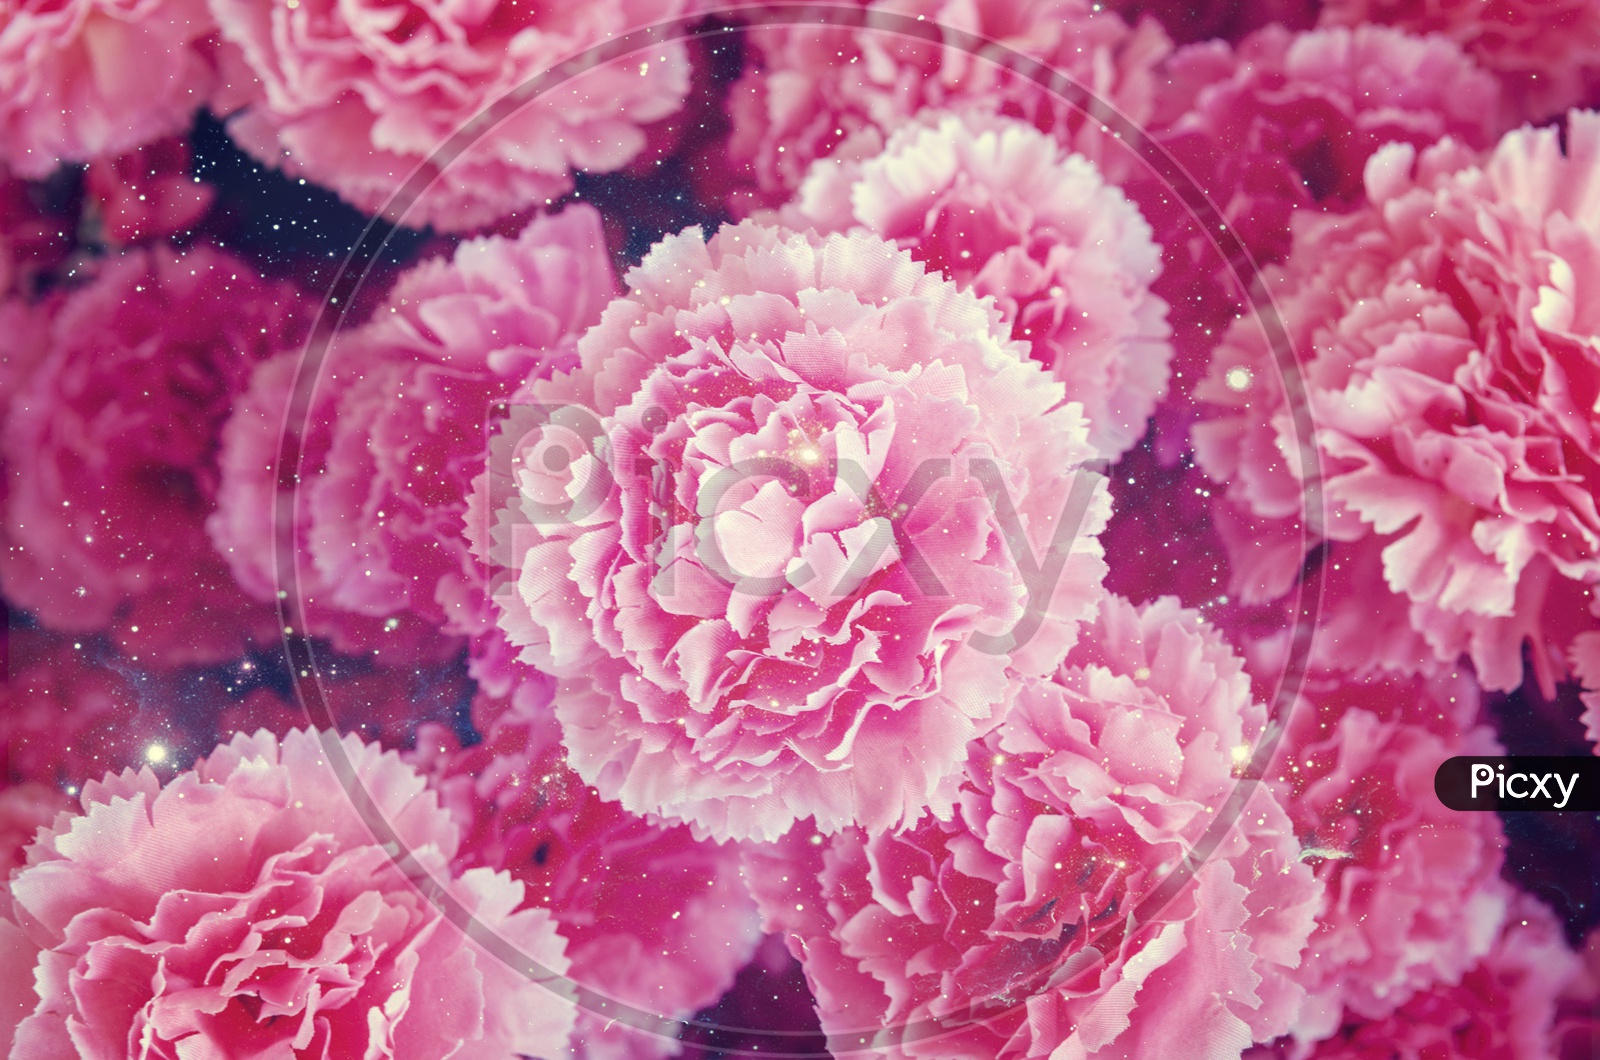 Pink flowers background for Valentine's Day, vintage filter image